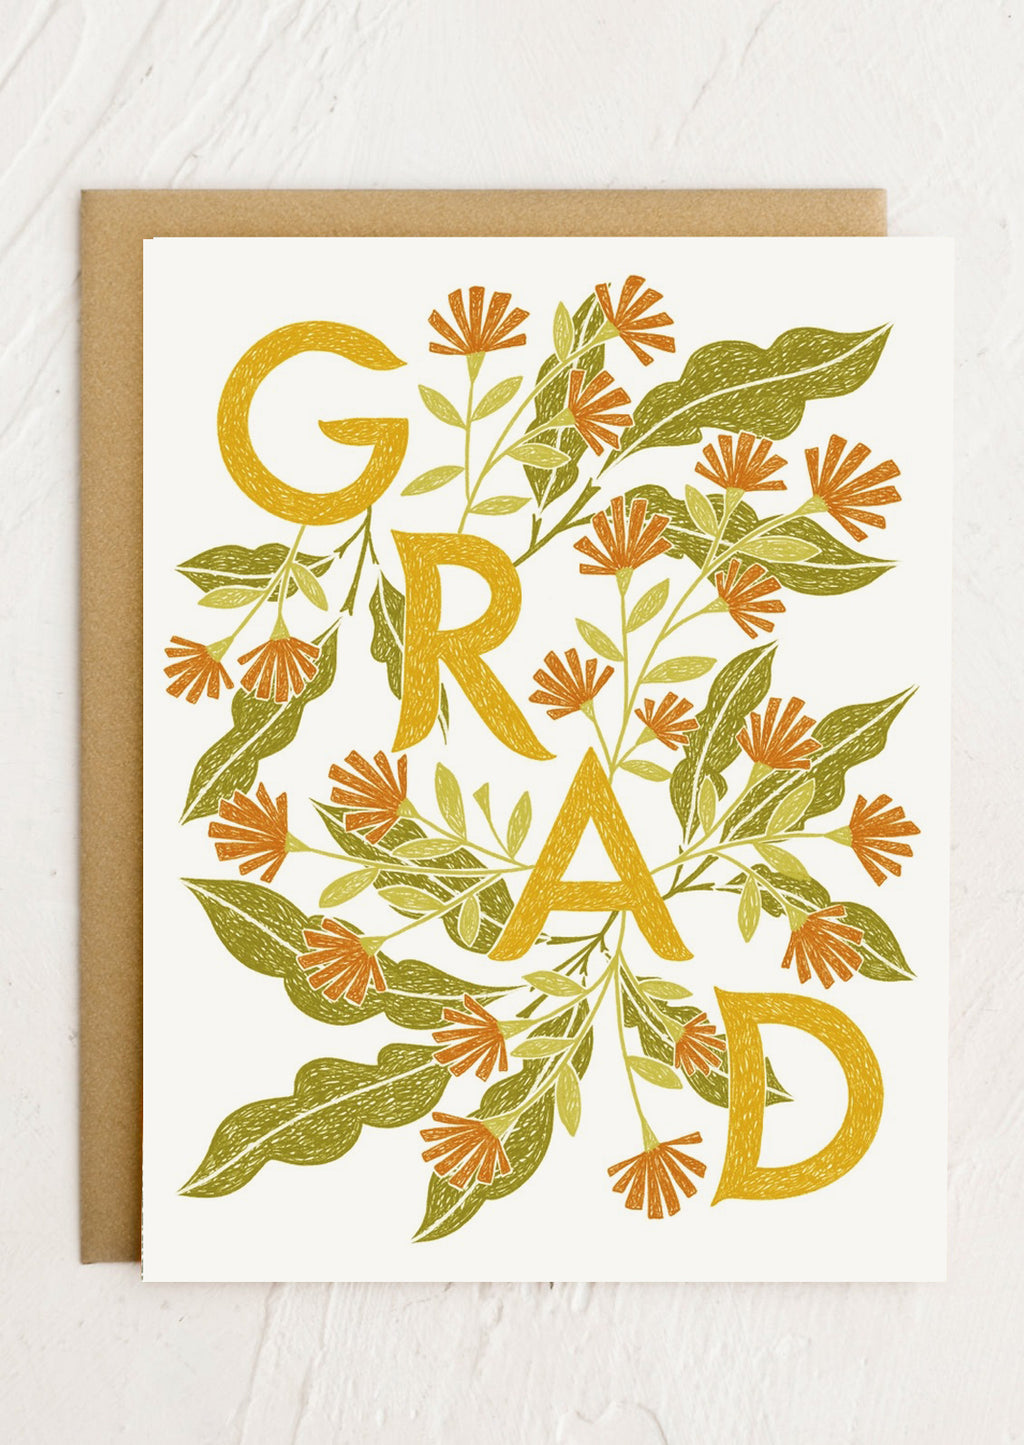 1: A floral print card reading "GRAD".